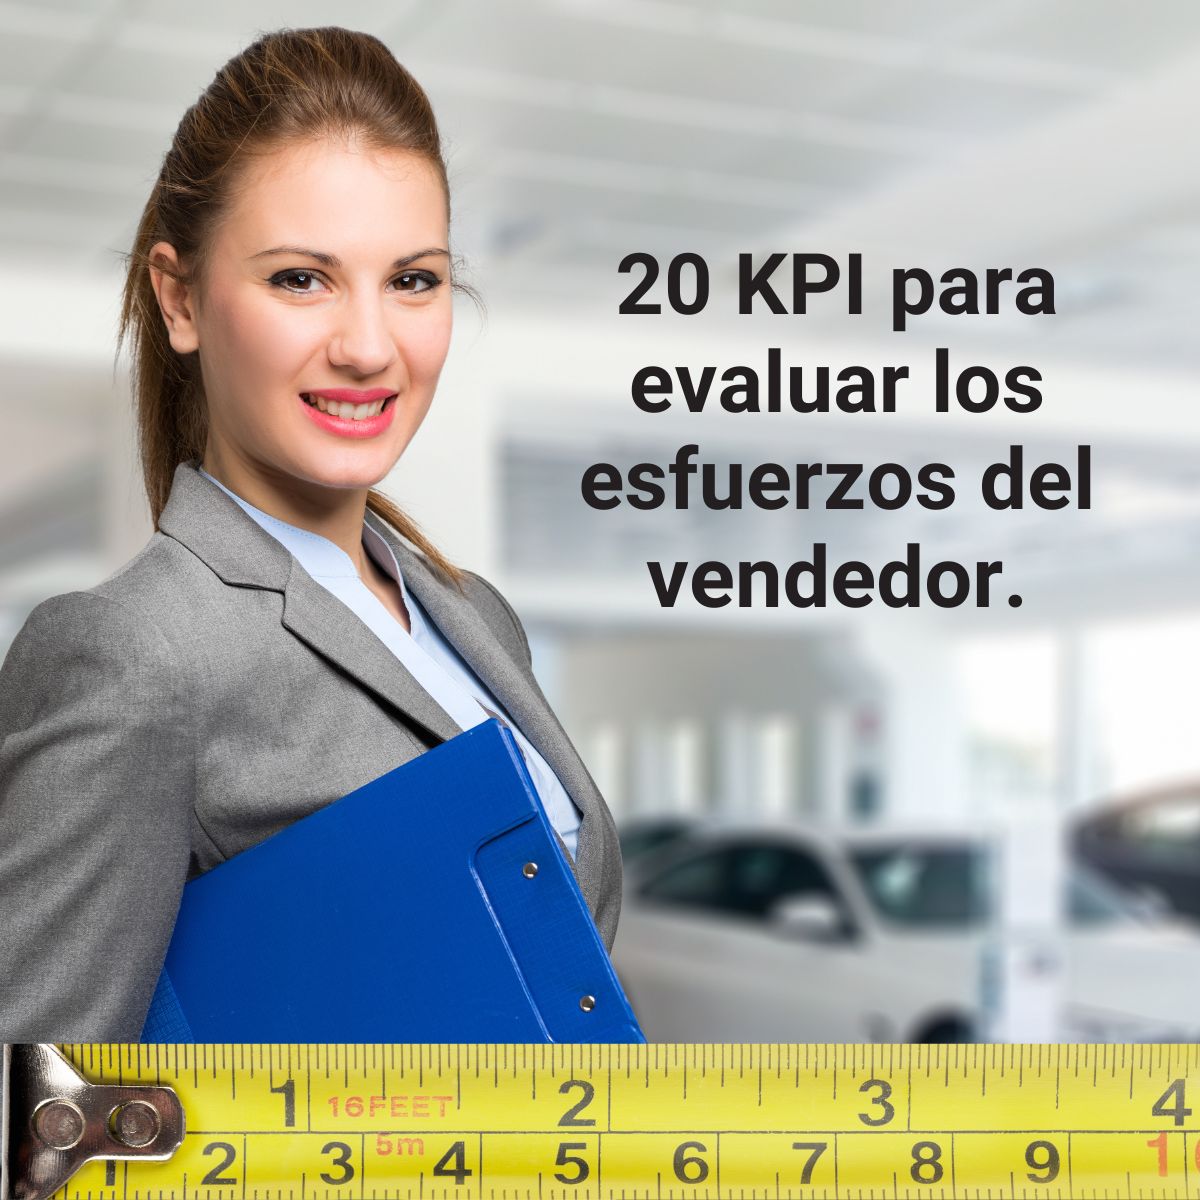 20 KPI para evaluar los esfuerzos del vendedor